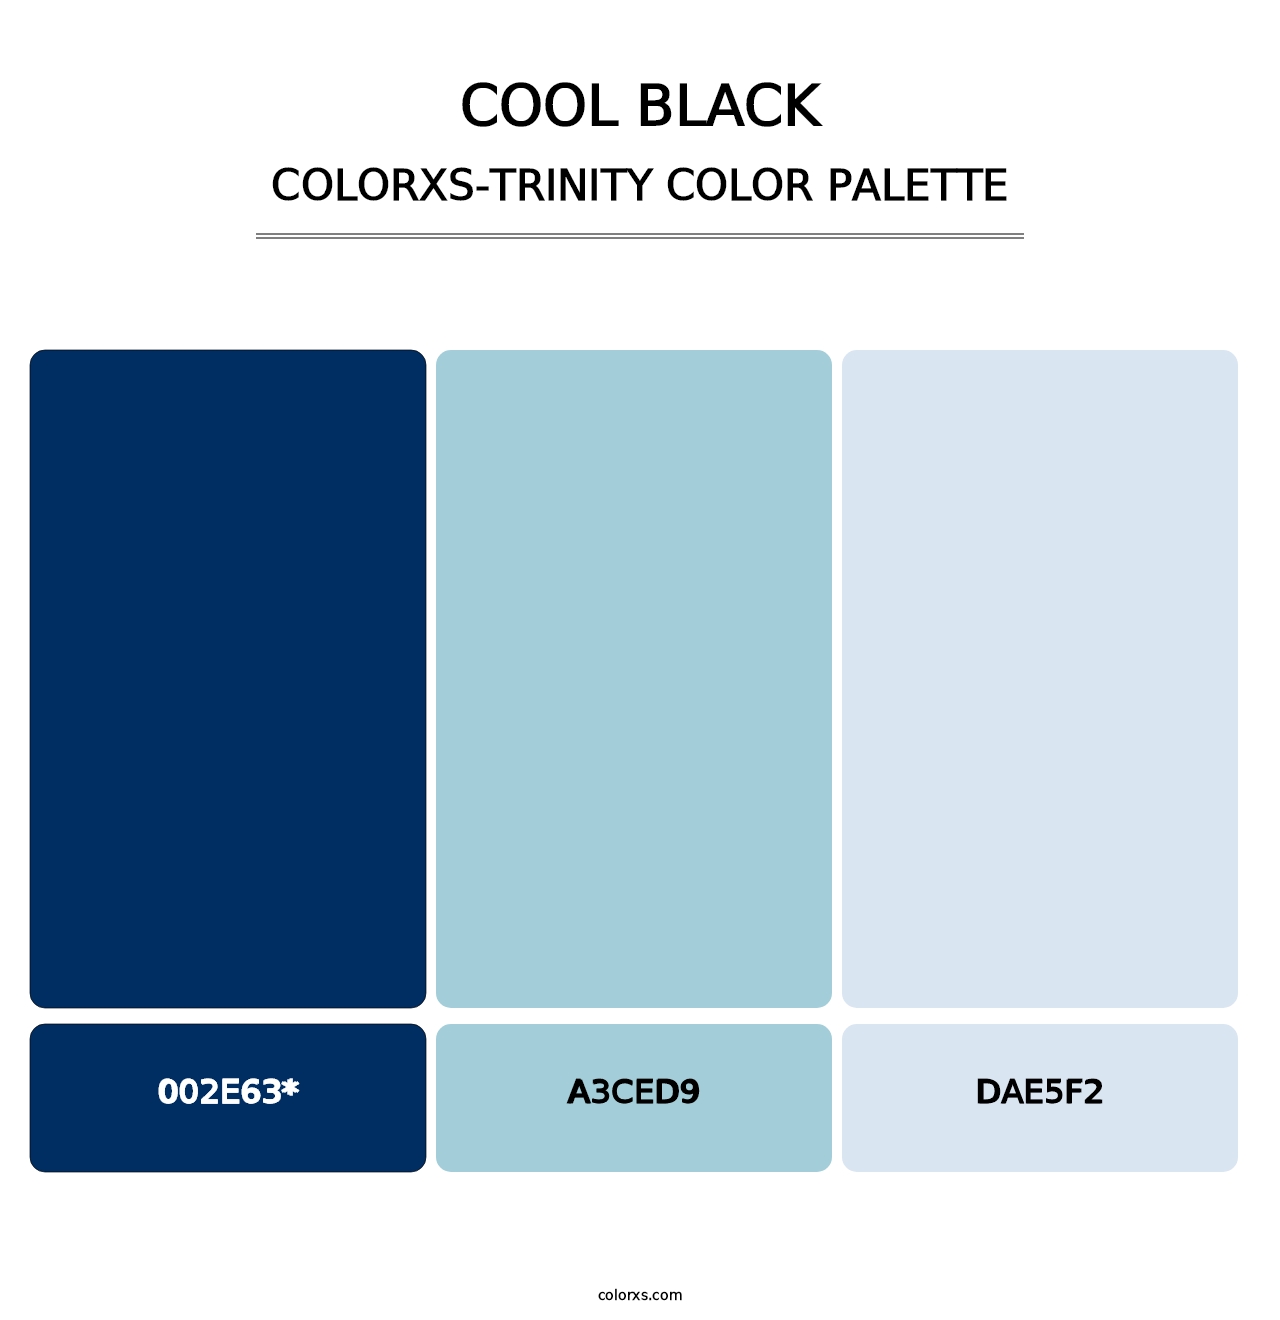 Cool Black - Colorxs Trinity Palette